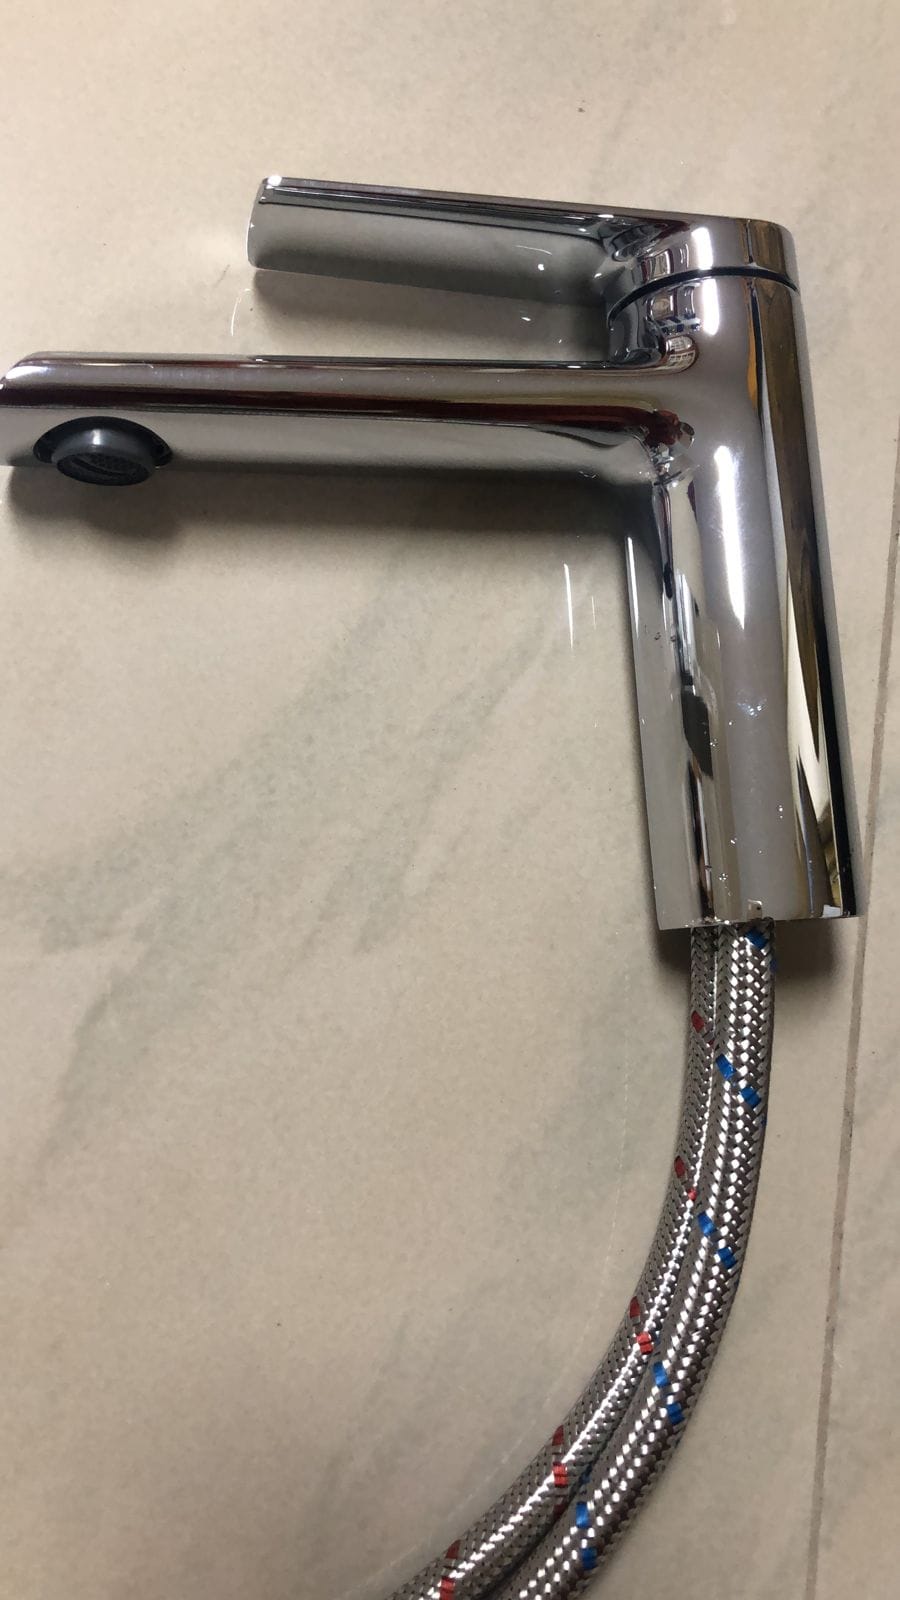 Elegantly, Polished Chrome Face Basin Mixer that Adds a Sleek Modern Design To Any Washroom - HUAY1081